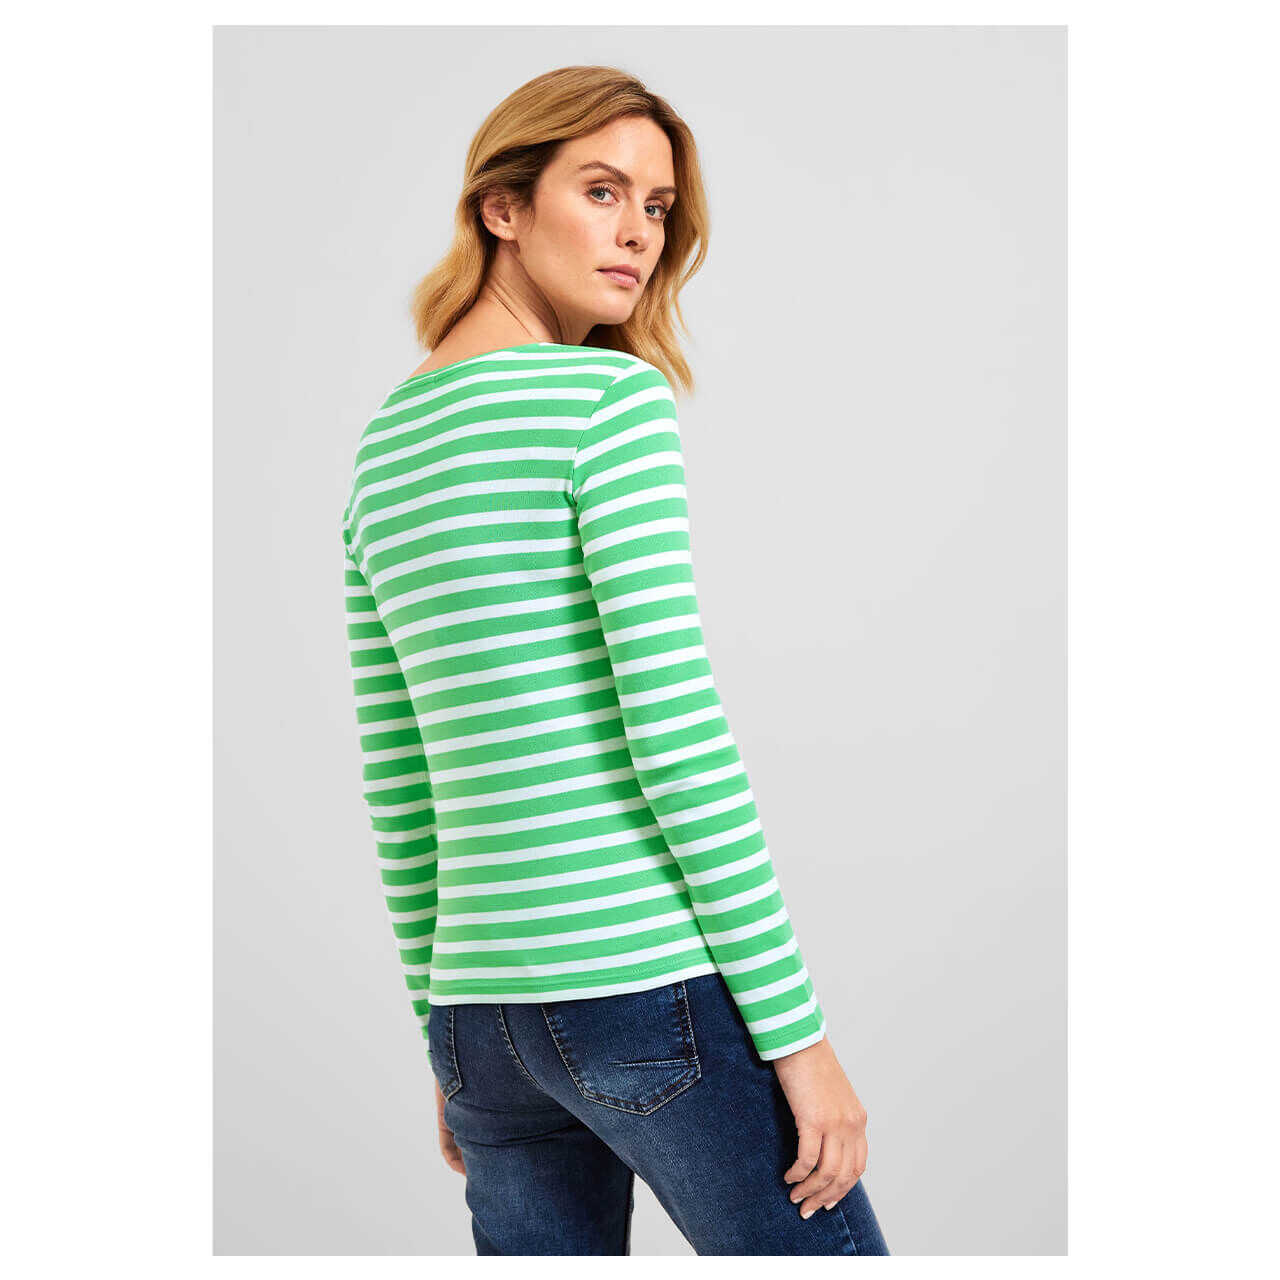 Cecil Pia Langarm Shirt smash green stripes